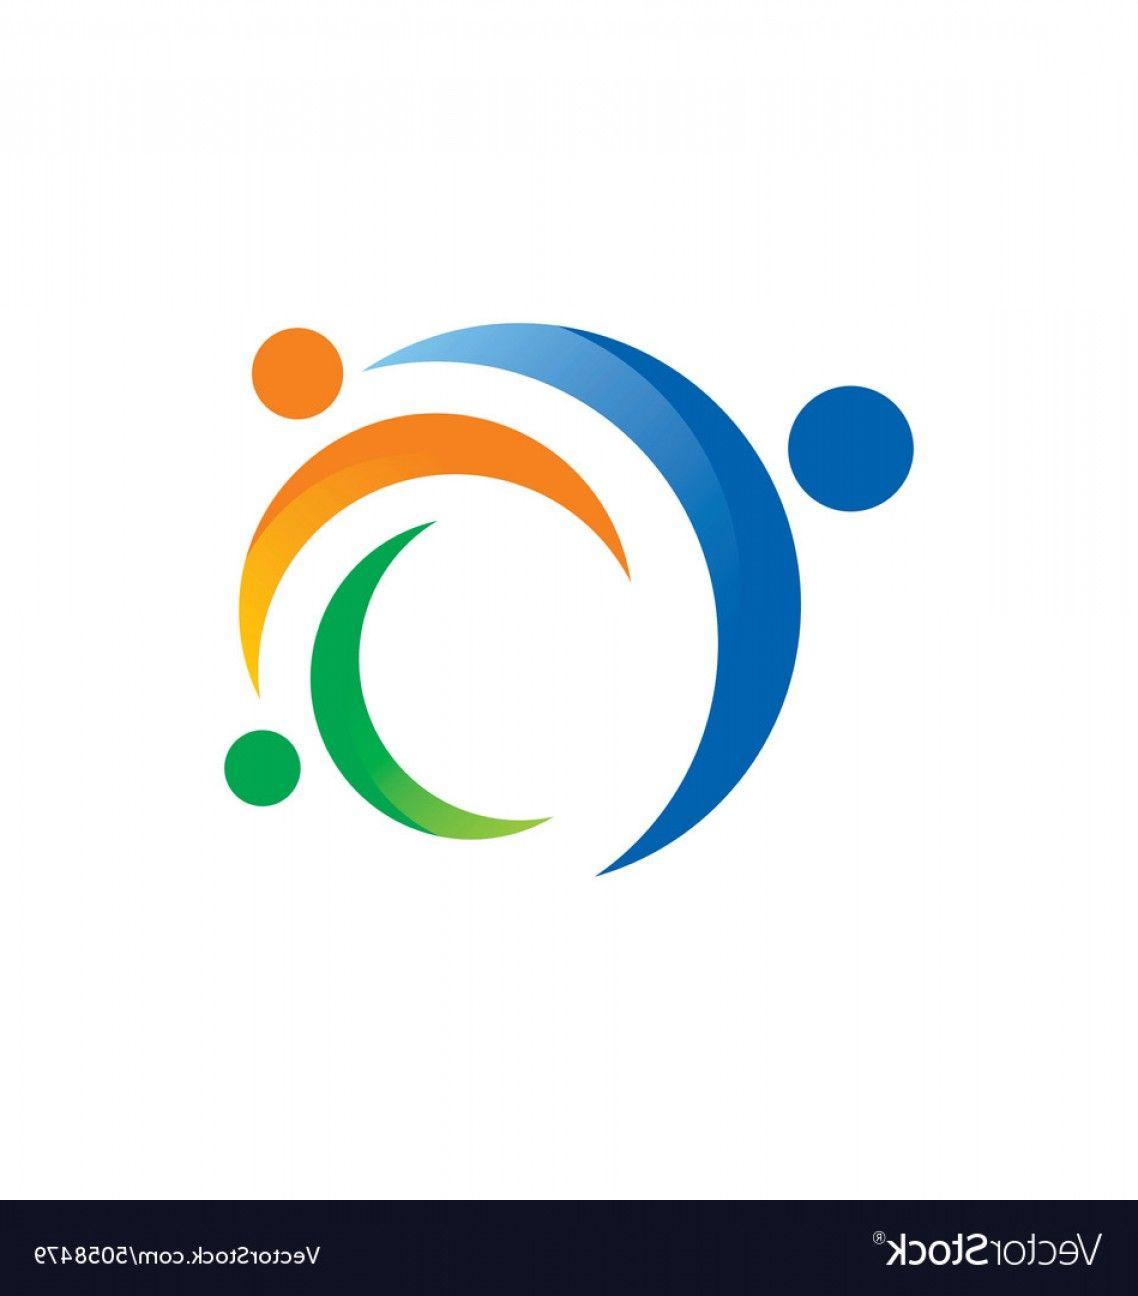 Blue and Orange Circle People Logo - People Circle Connection Group Logo Vector | SOIDERGI